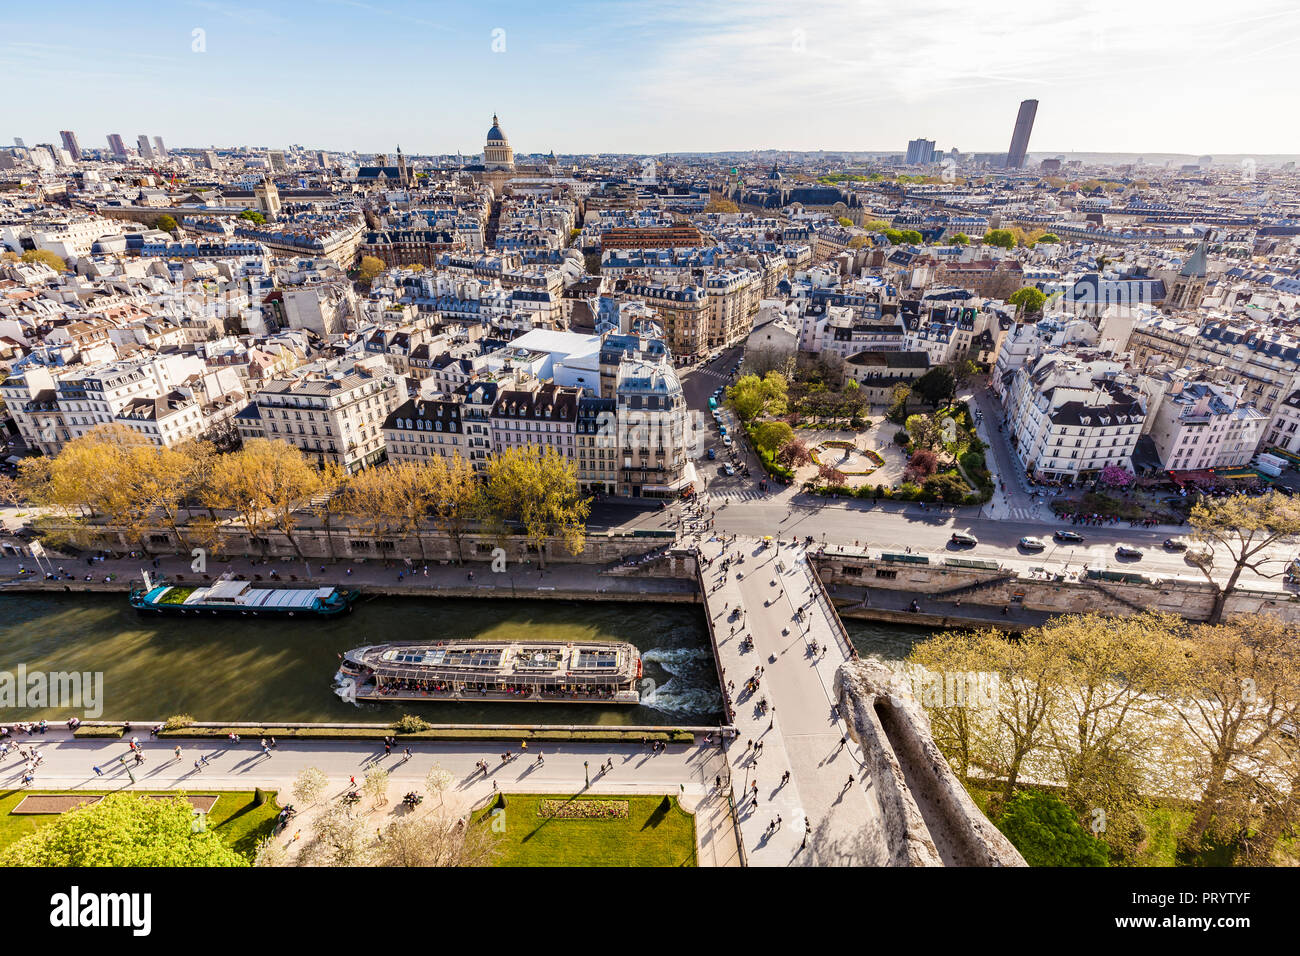 France, Paris, City center with tourist boat on Seine river Stock Photo